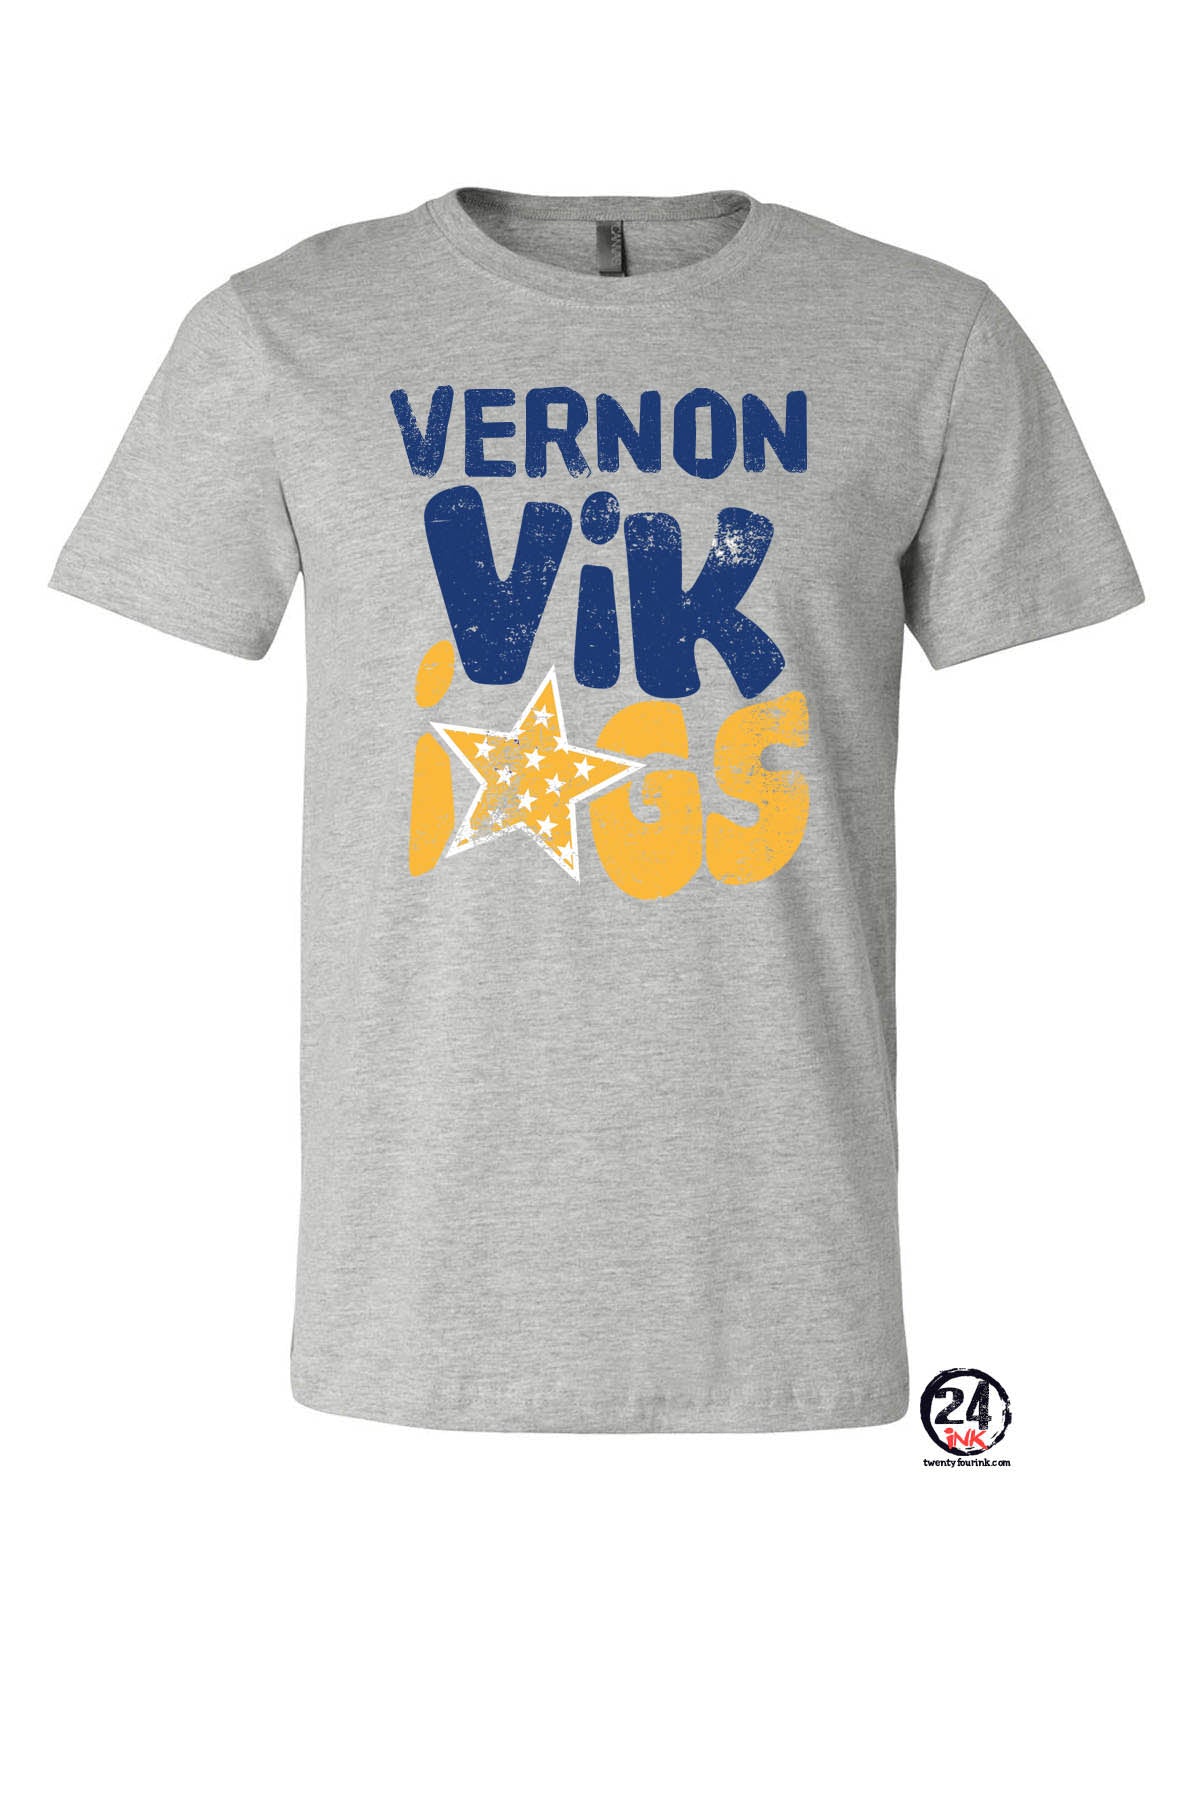 Vernon design 14 t-Shirt